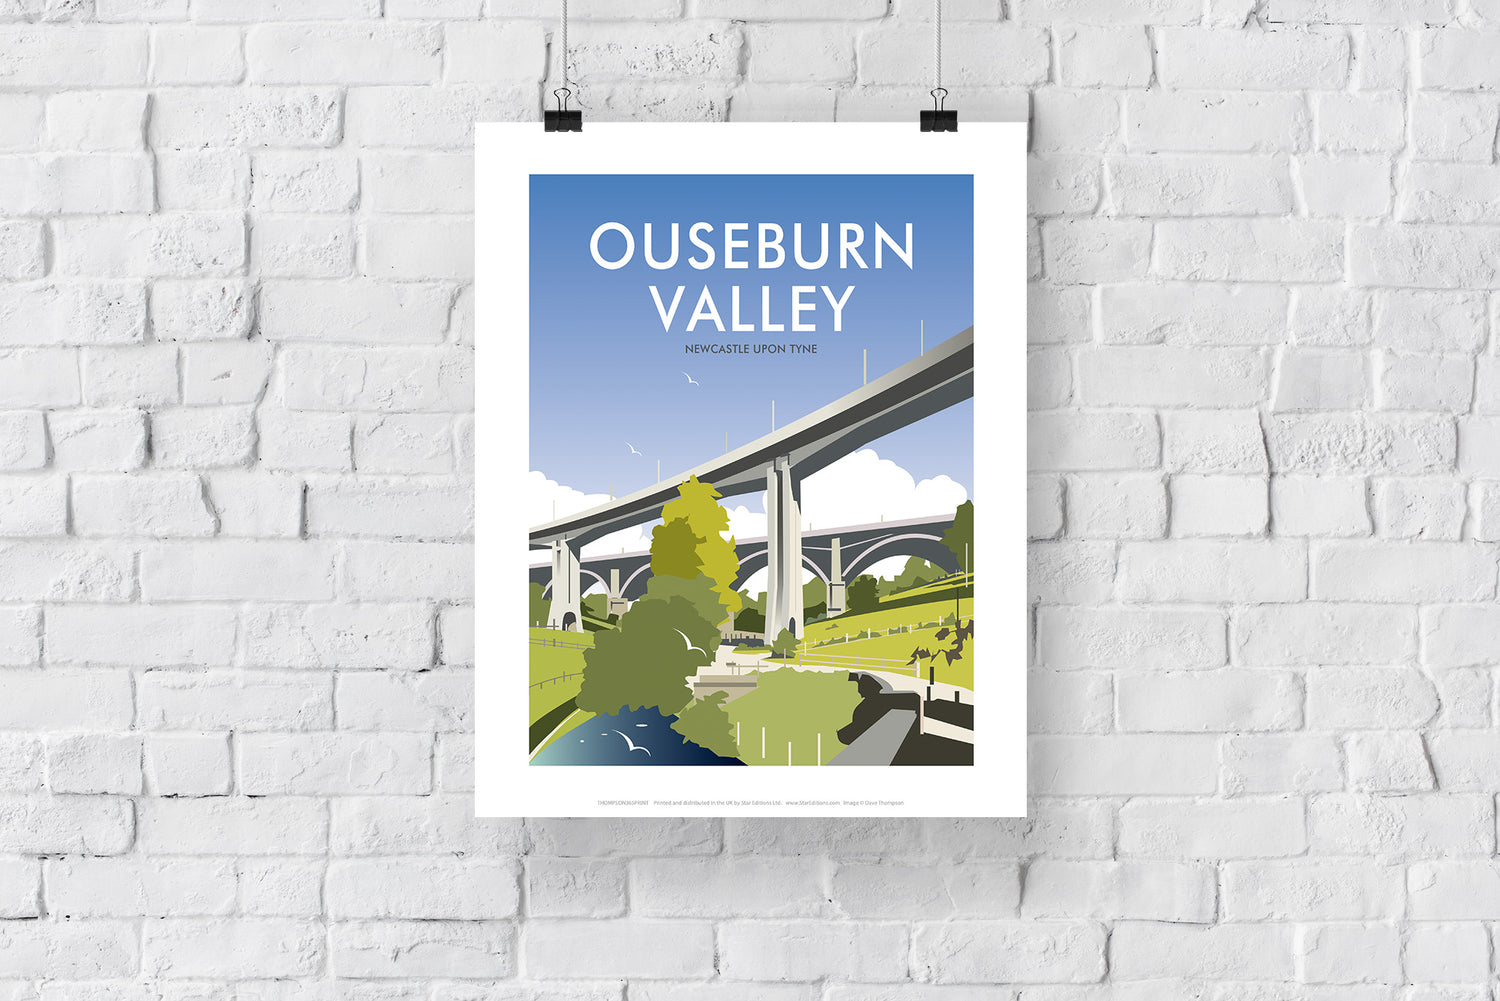 Ouseburn Valley, Newcastle Upon Tyne - Art Print